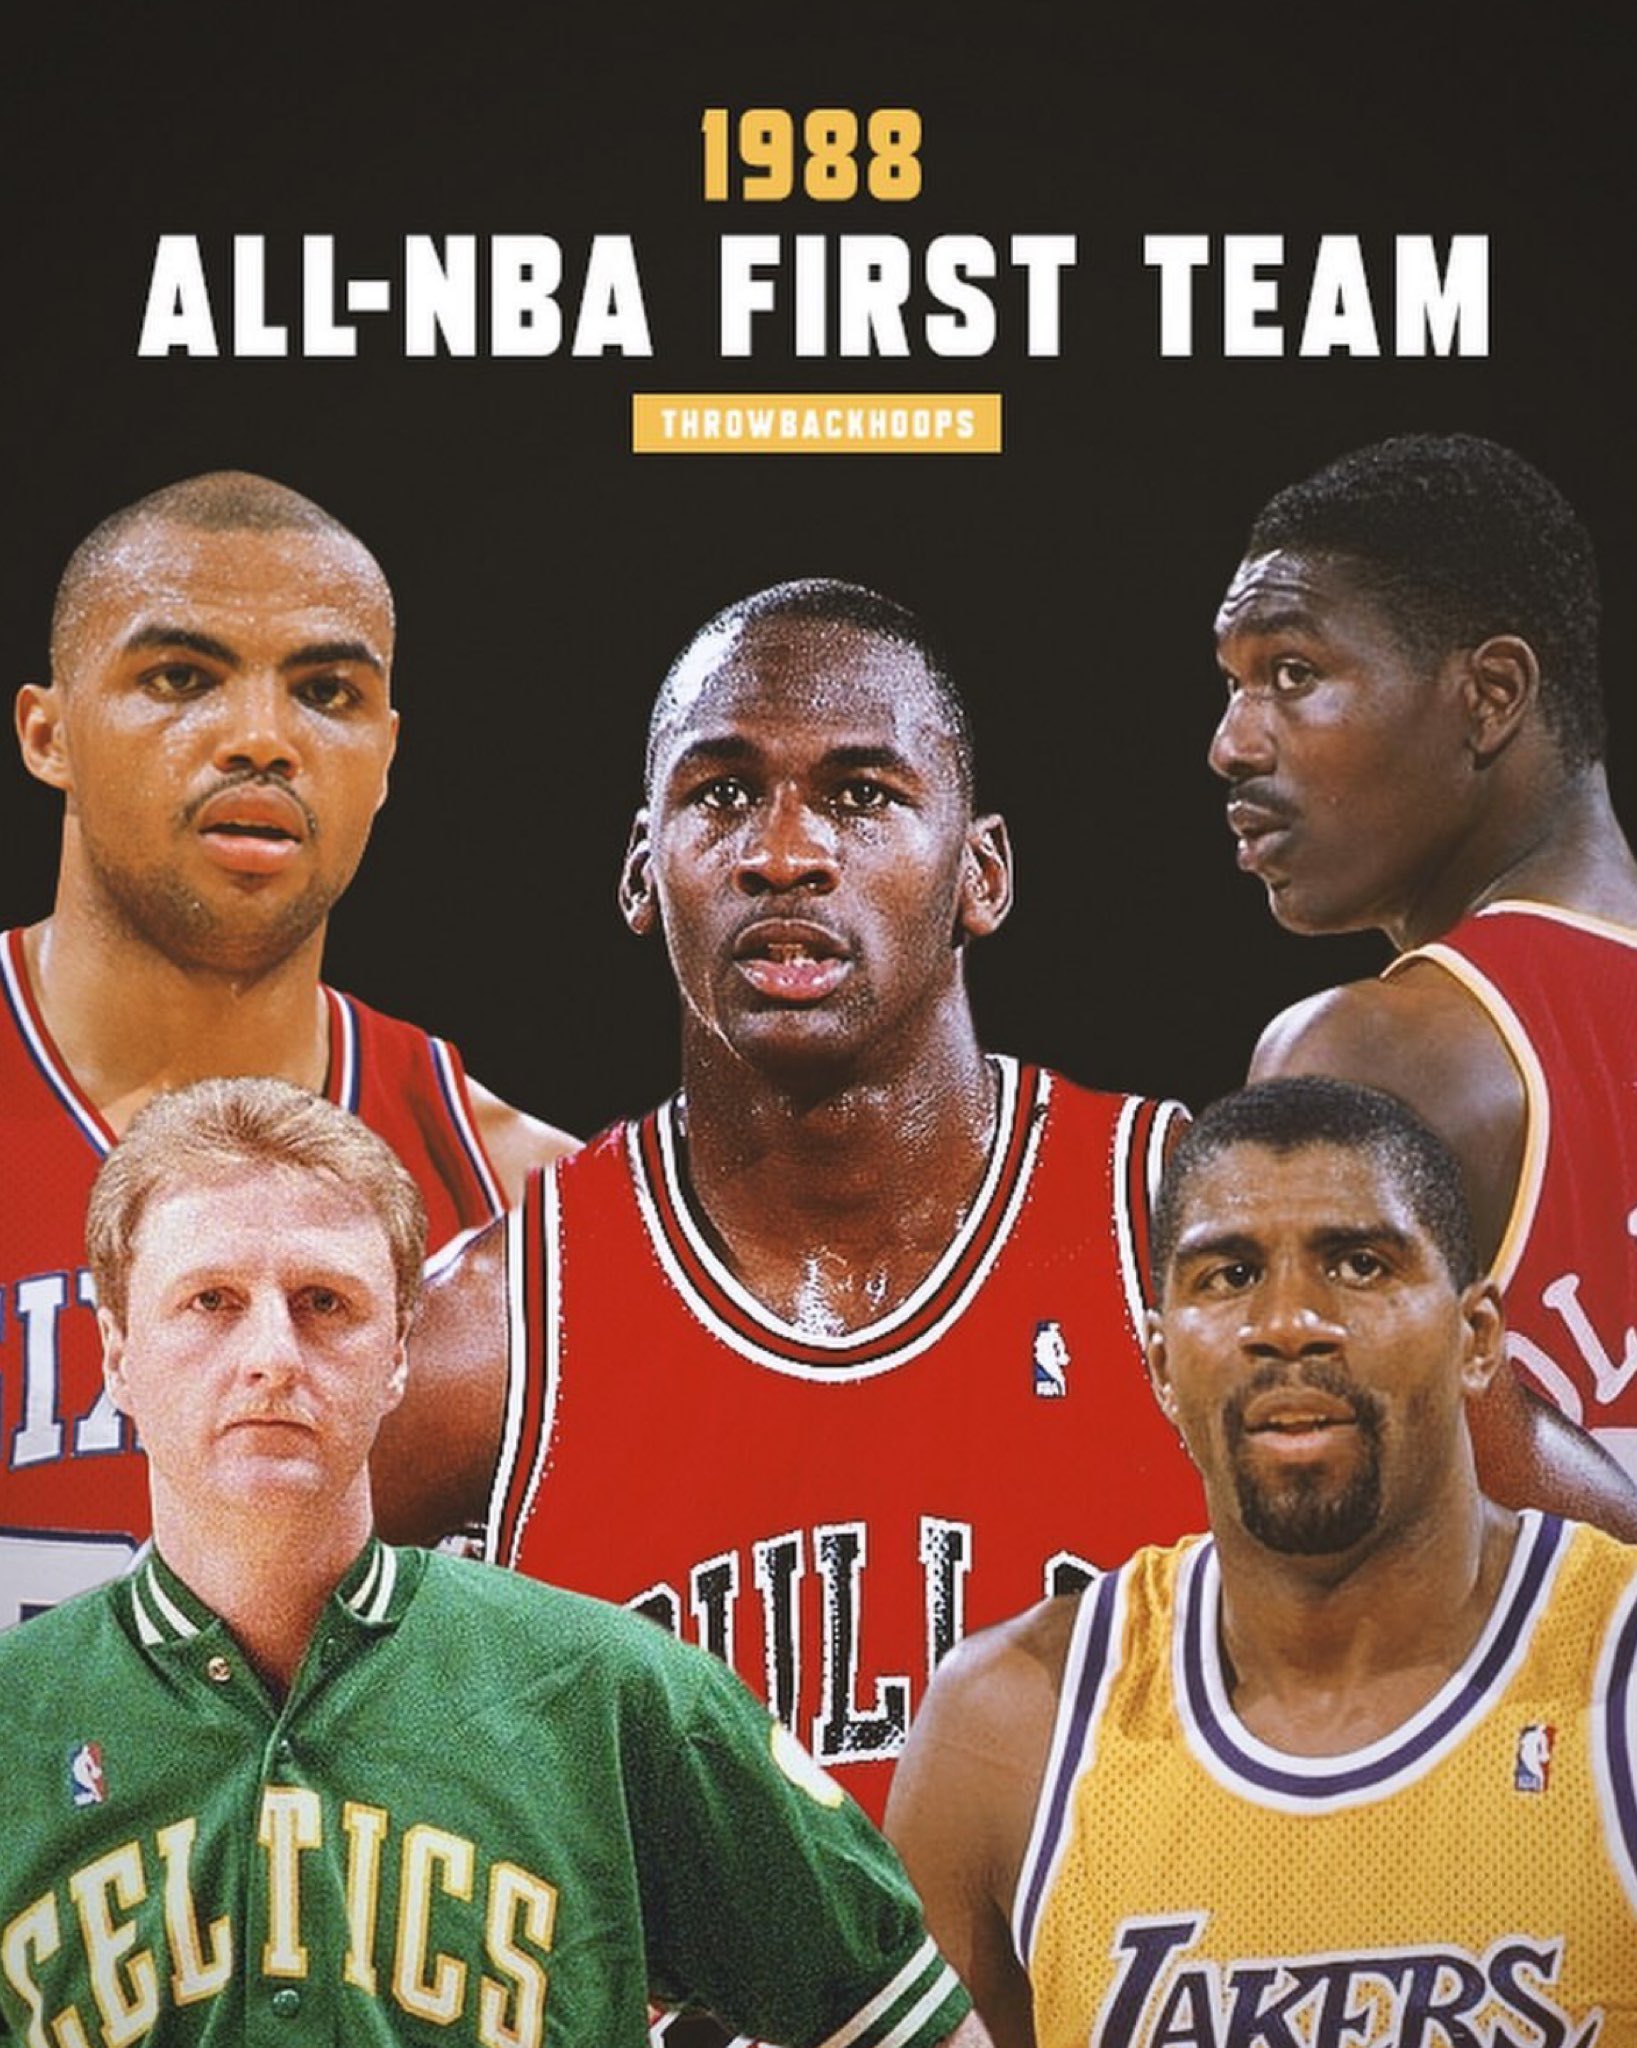 The 1990s NBA All-Decade Team